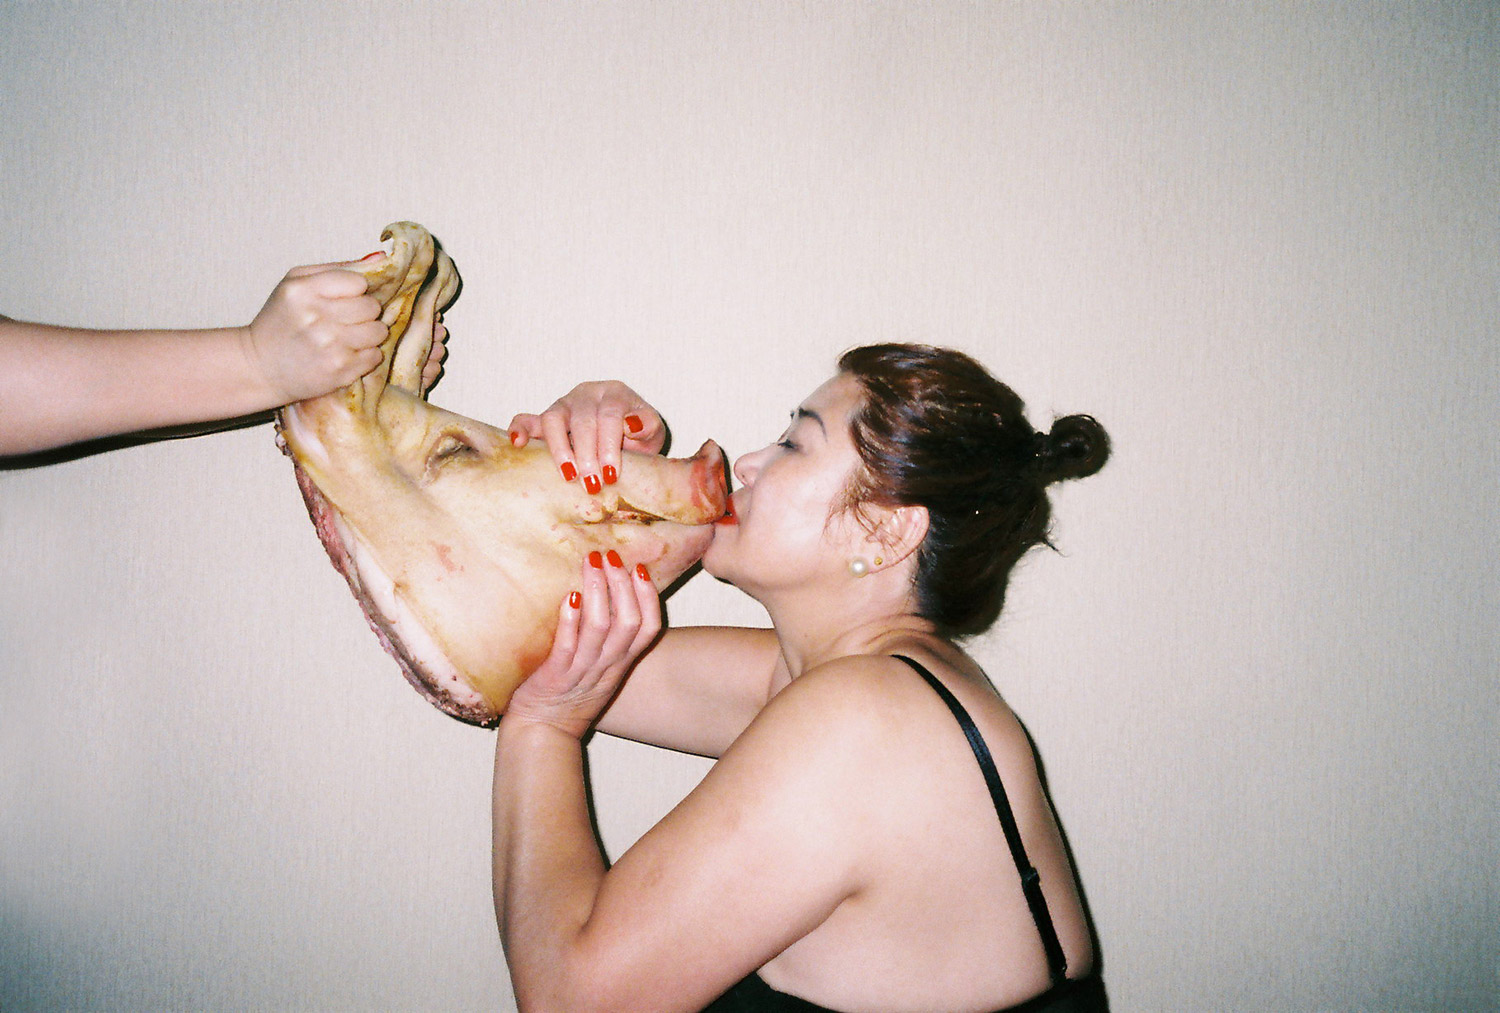 Ren Hang - candid photo of woman kissing severed pig head